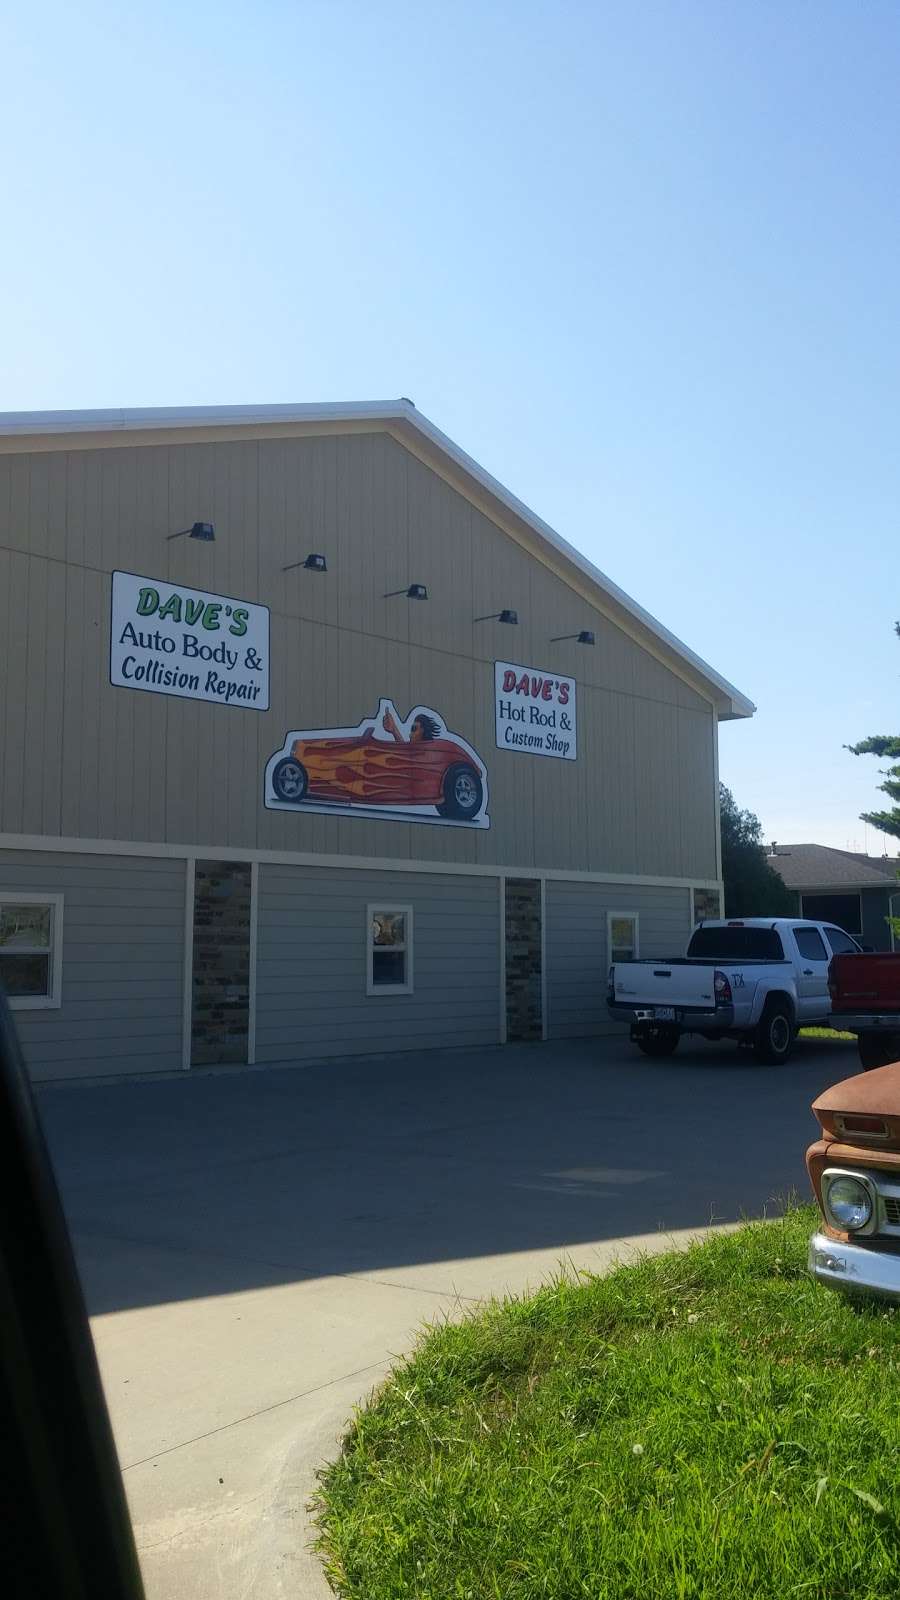 Daves Auto Body & Hot Rod Shop | 513 US-169, Smithville, MO 64089, USA | Phone: (816) 532-3600